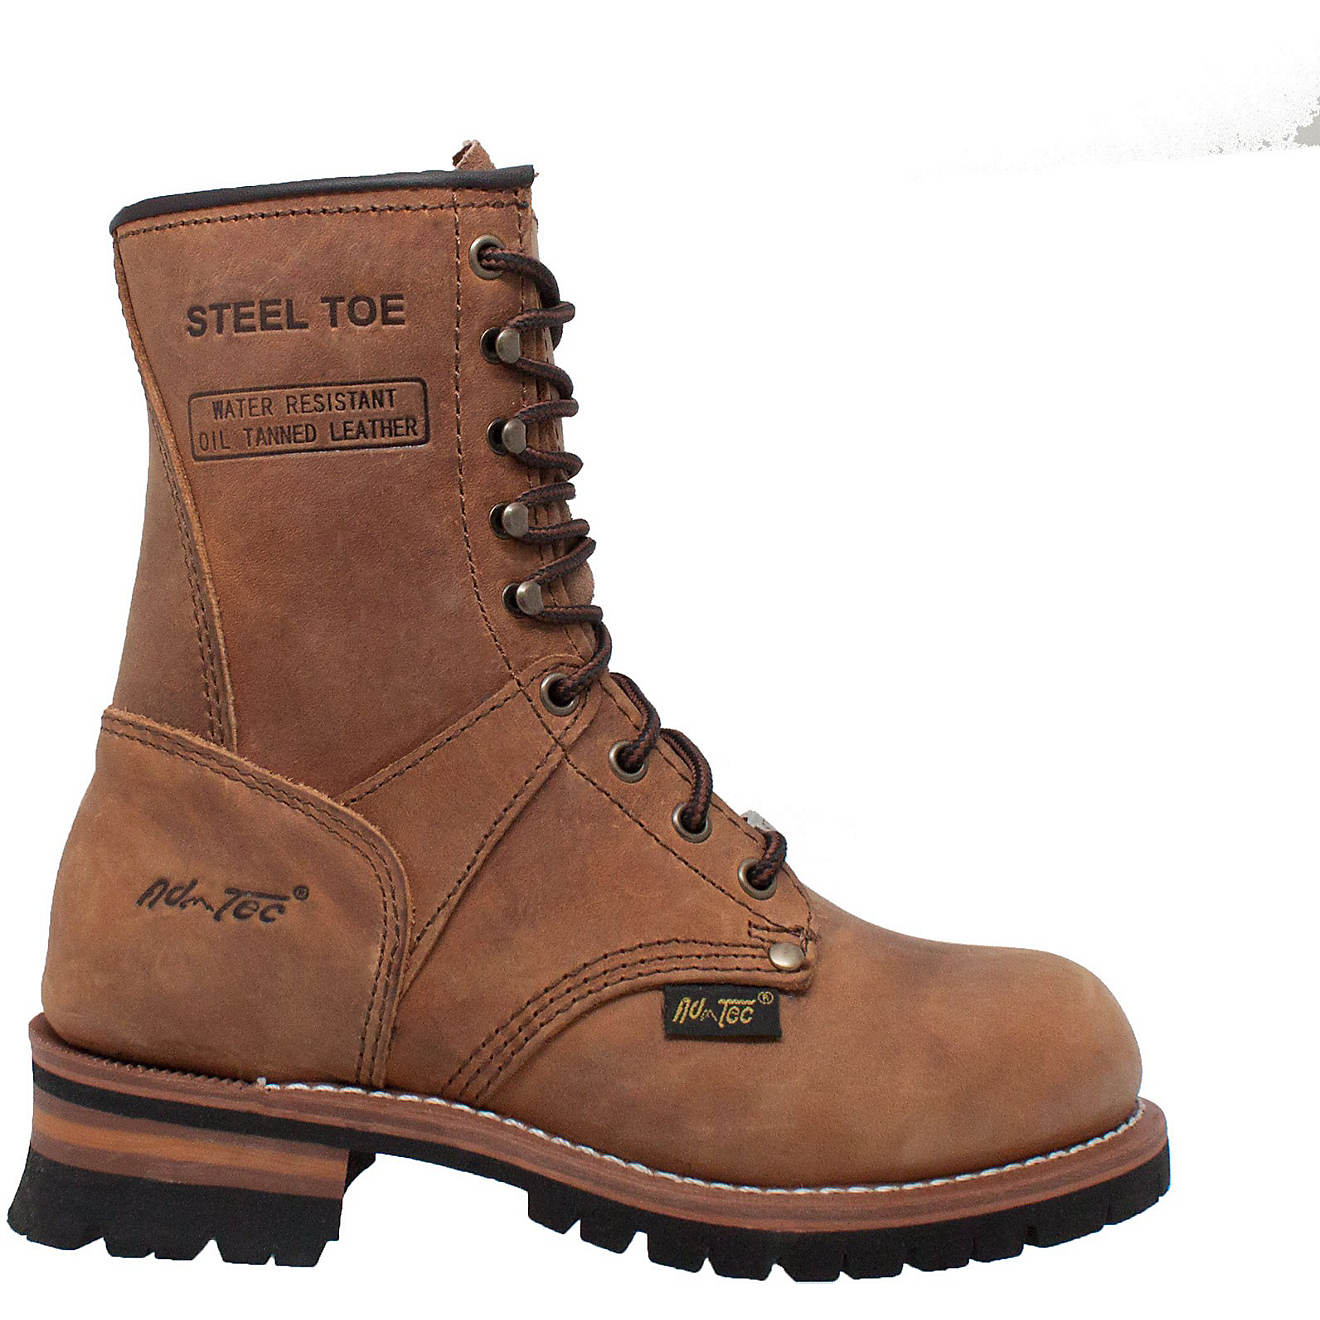 AdTec Women’s Steel Toe Logger Work Boots                                                                                      - view number 1